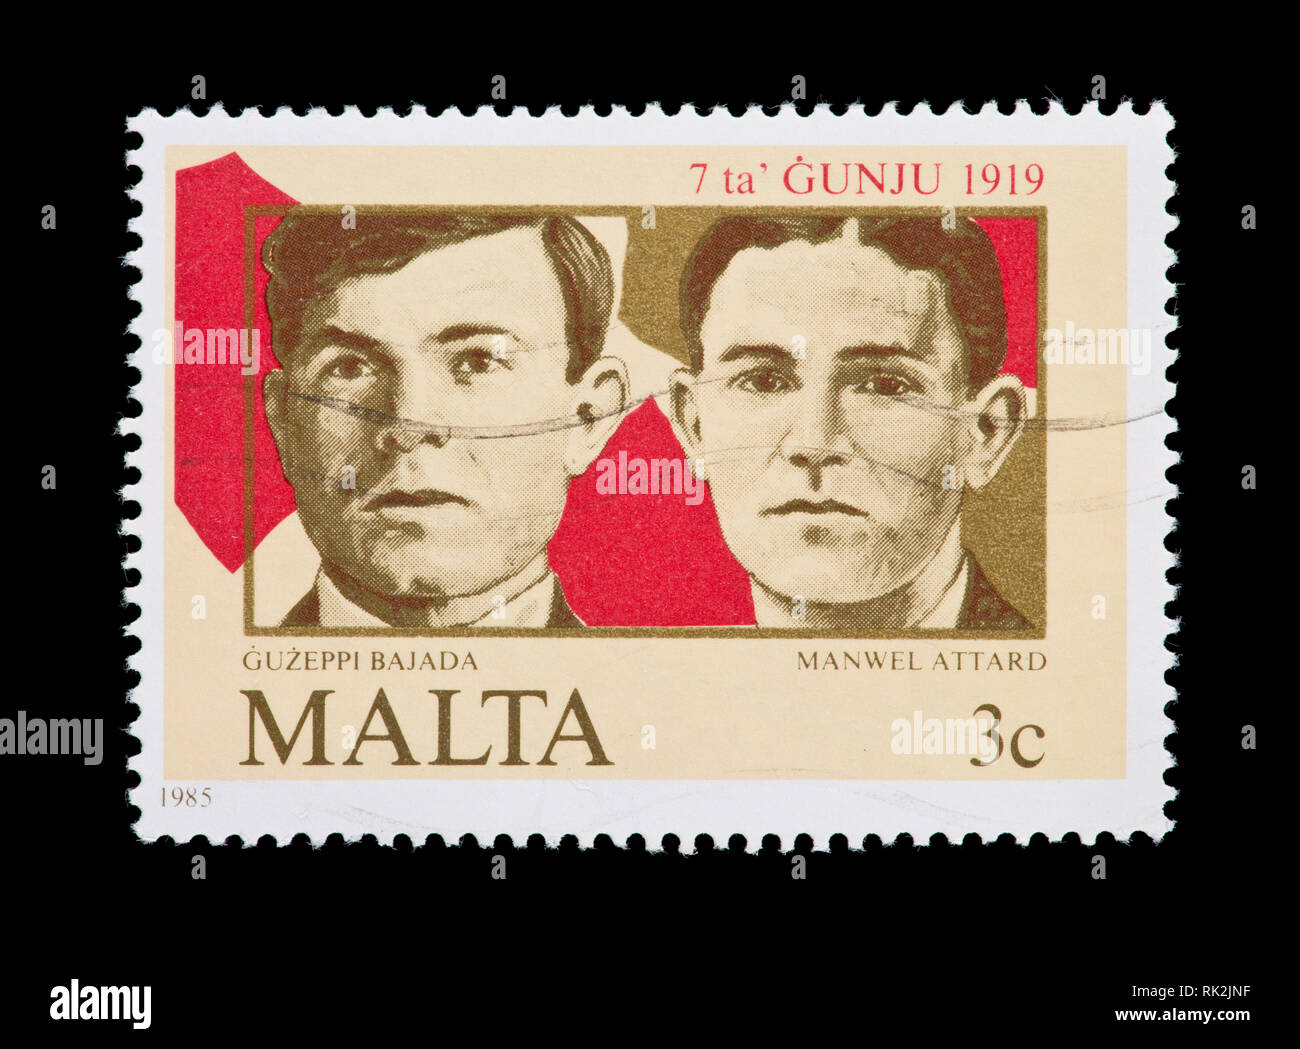 Postage stamp from Malta depicting Guzeppi Bajada and Manwel Attard, 66th anniversary of the June 7 uprising Stock Photo